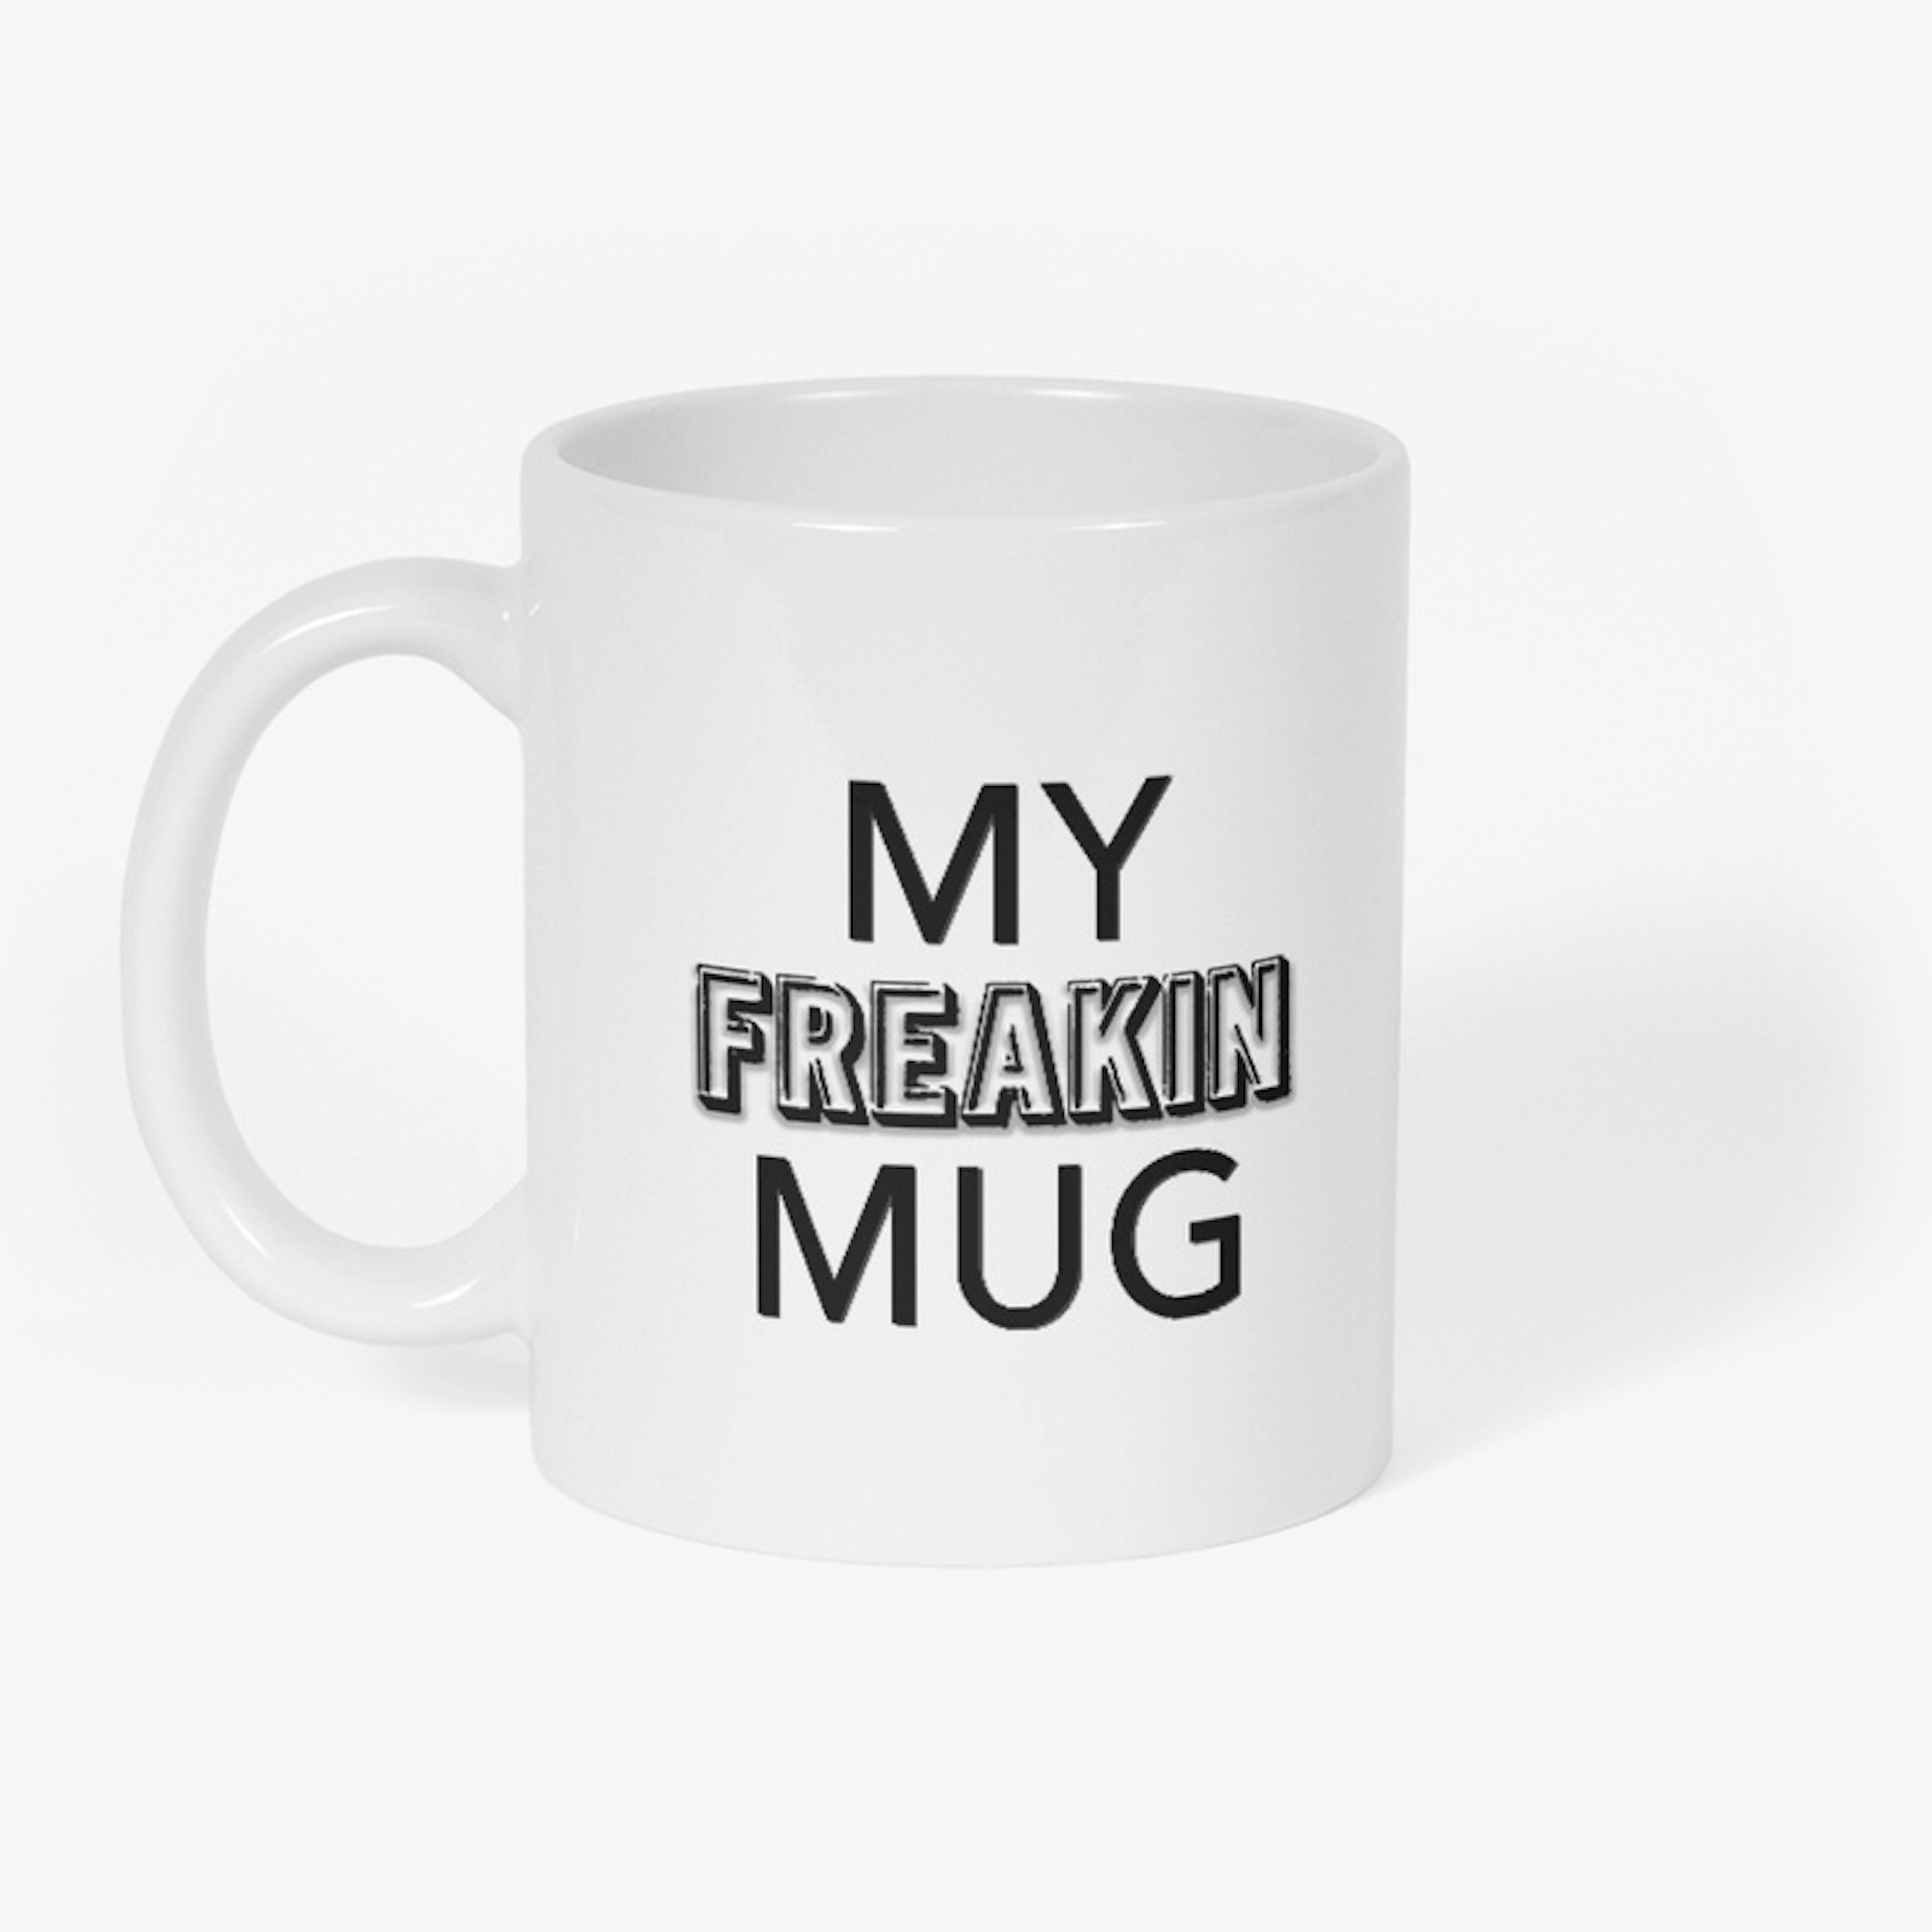 Tell Everyone It's Your FREAKIN Mug